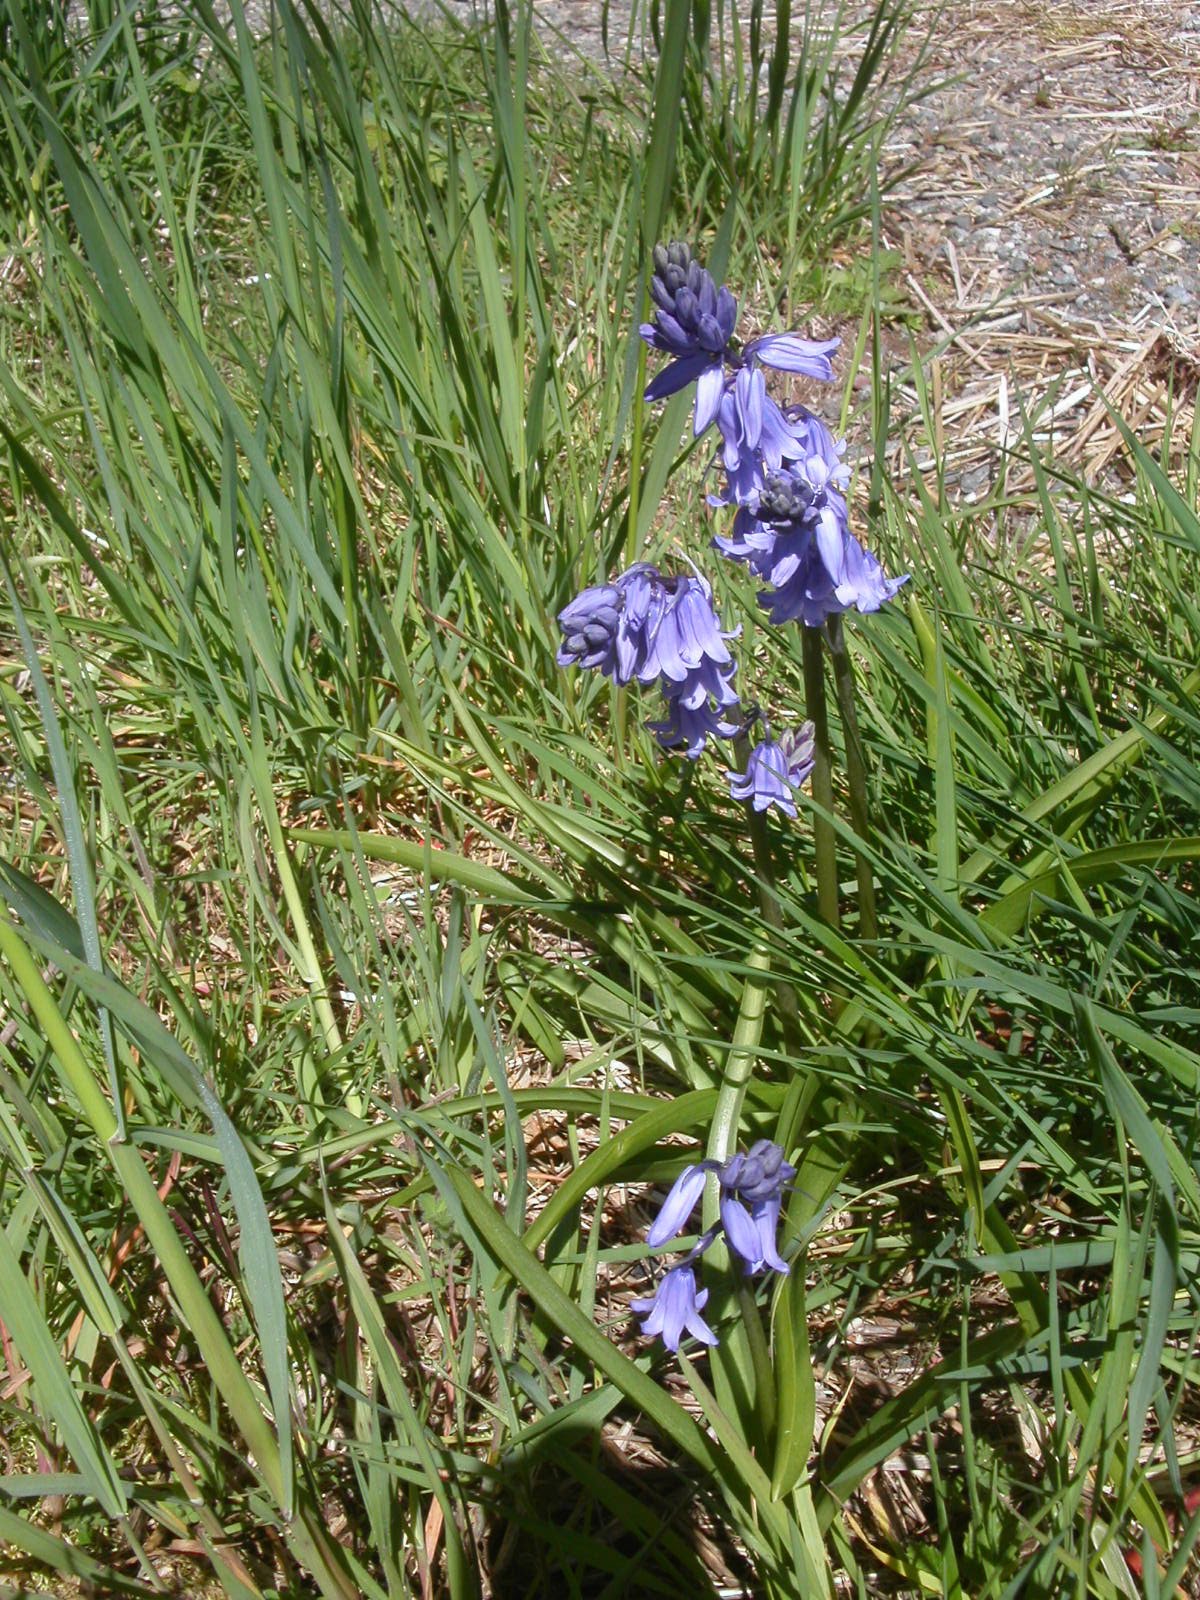 The Blue Flax flowers last